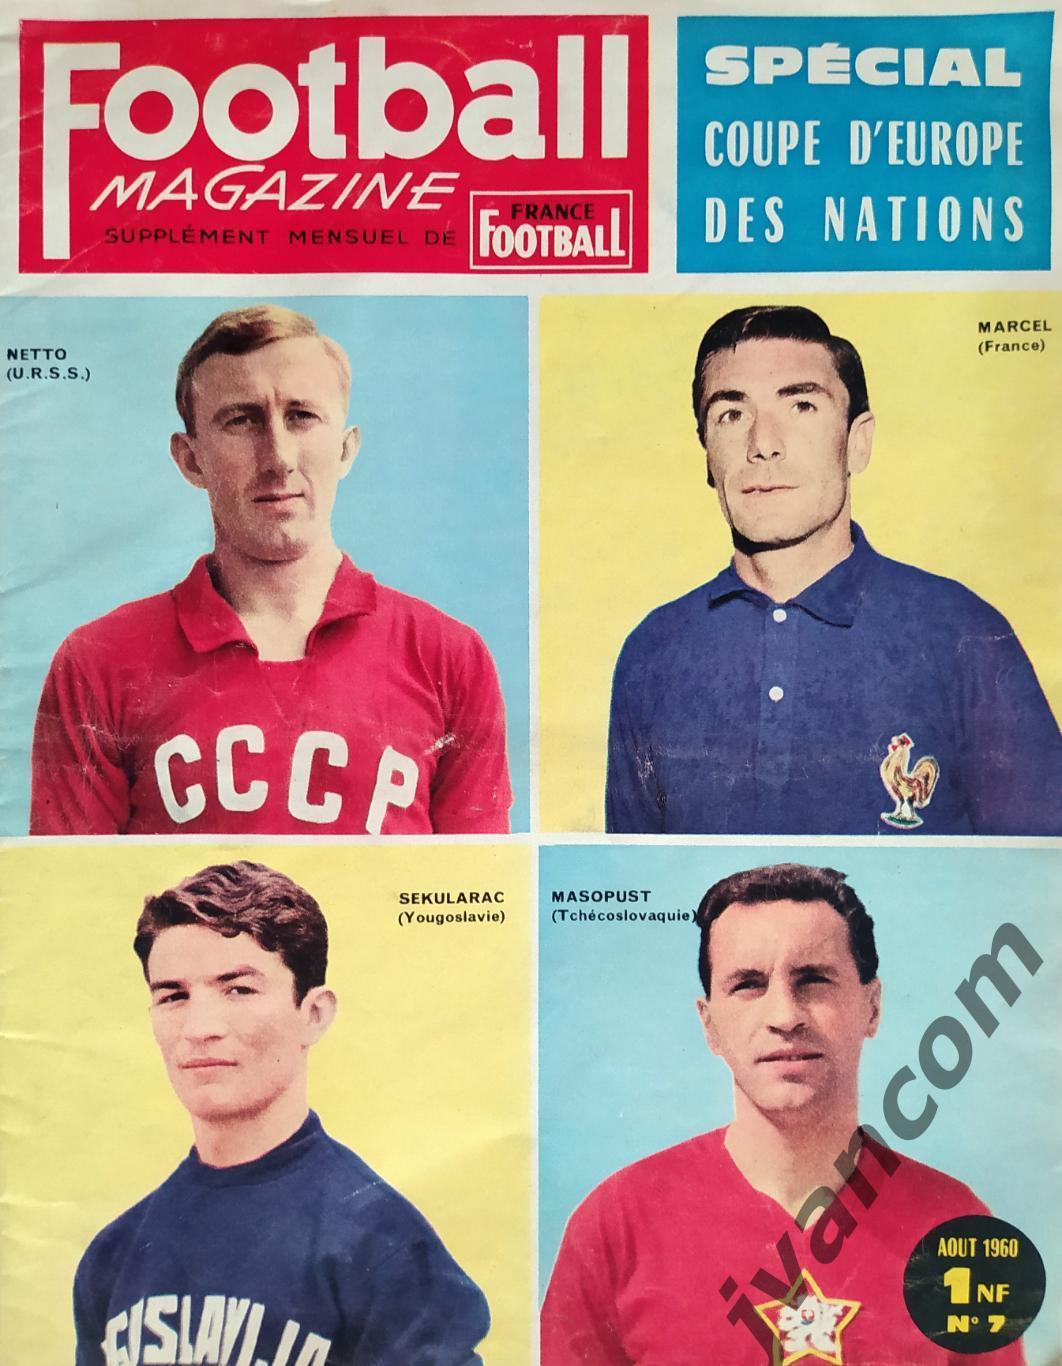 Журнал FOOTBALL MAGAZINE №7 за 1960 год. 1-й Кубок Европейских Наций по футболу.